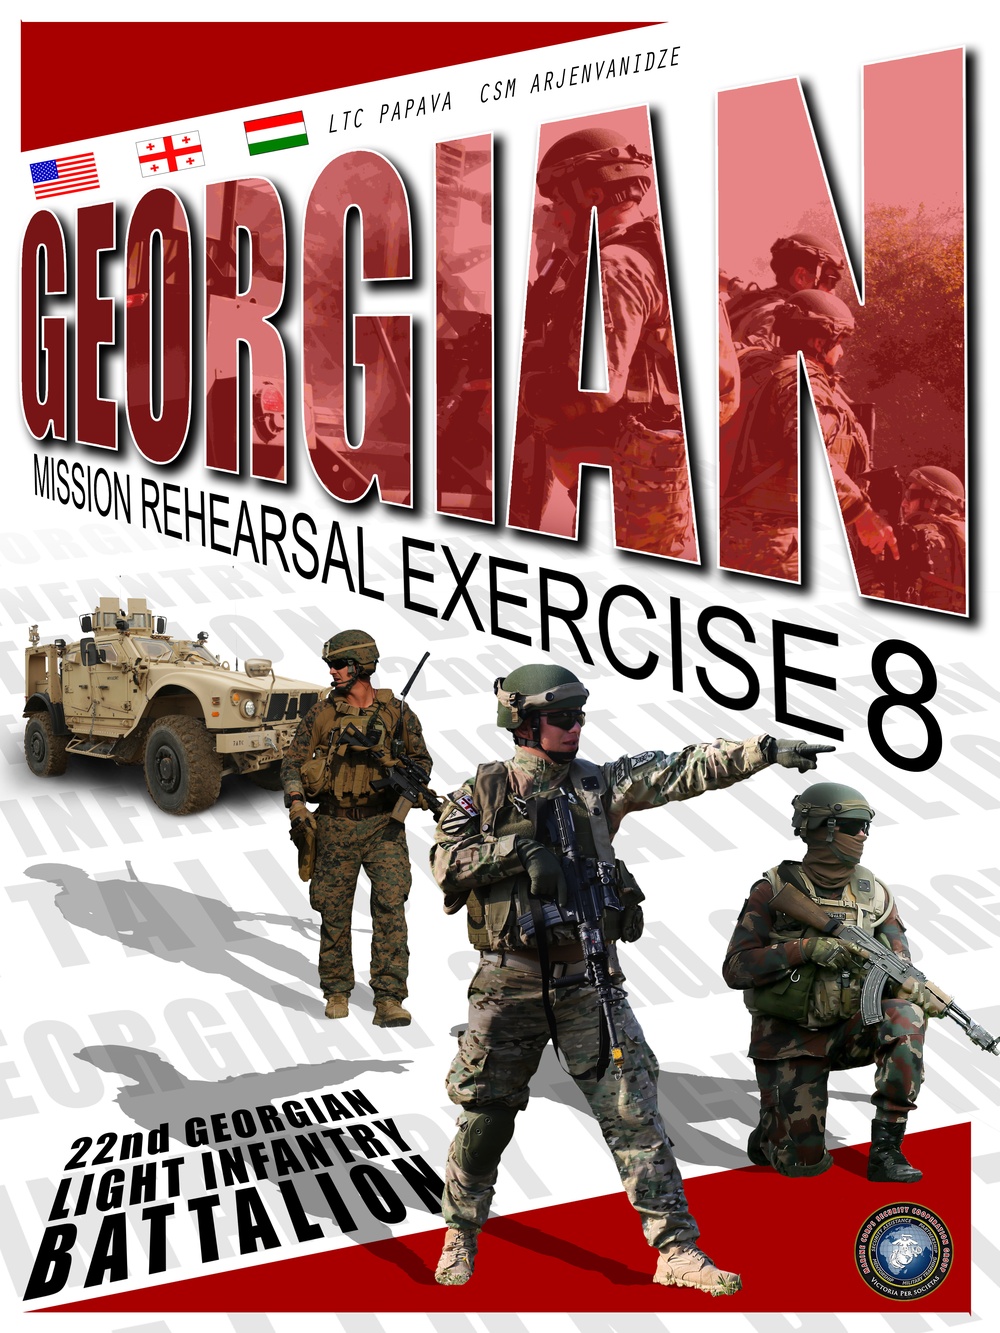 Georgian Mission Rehearsal Exercise